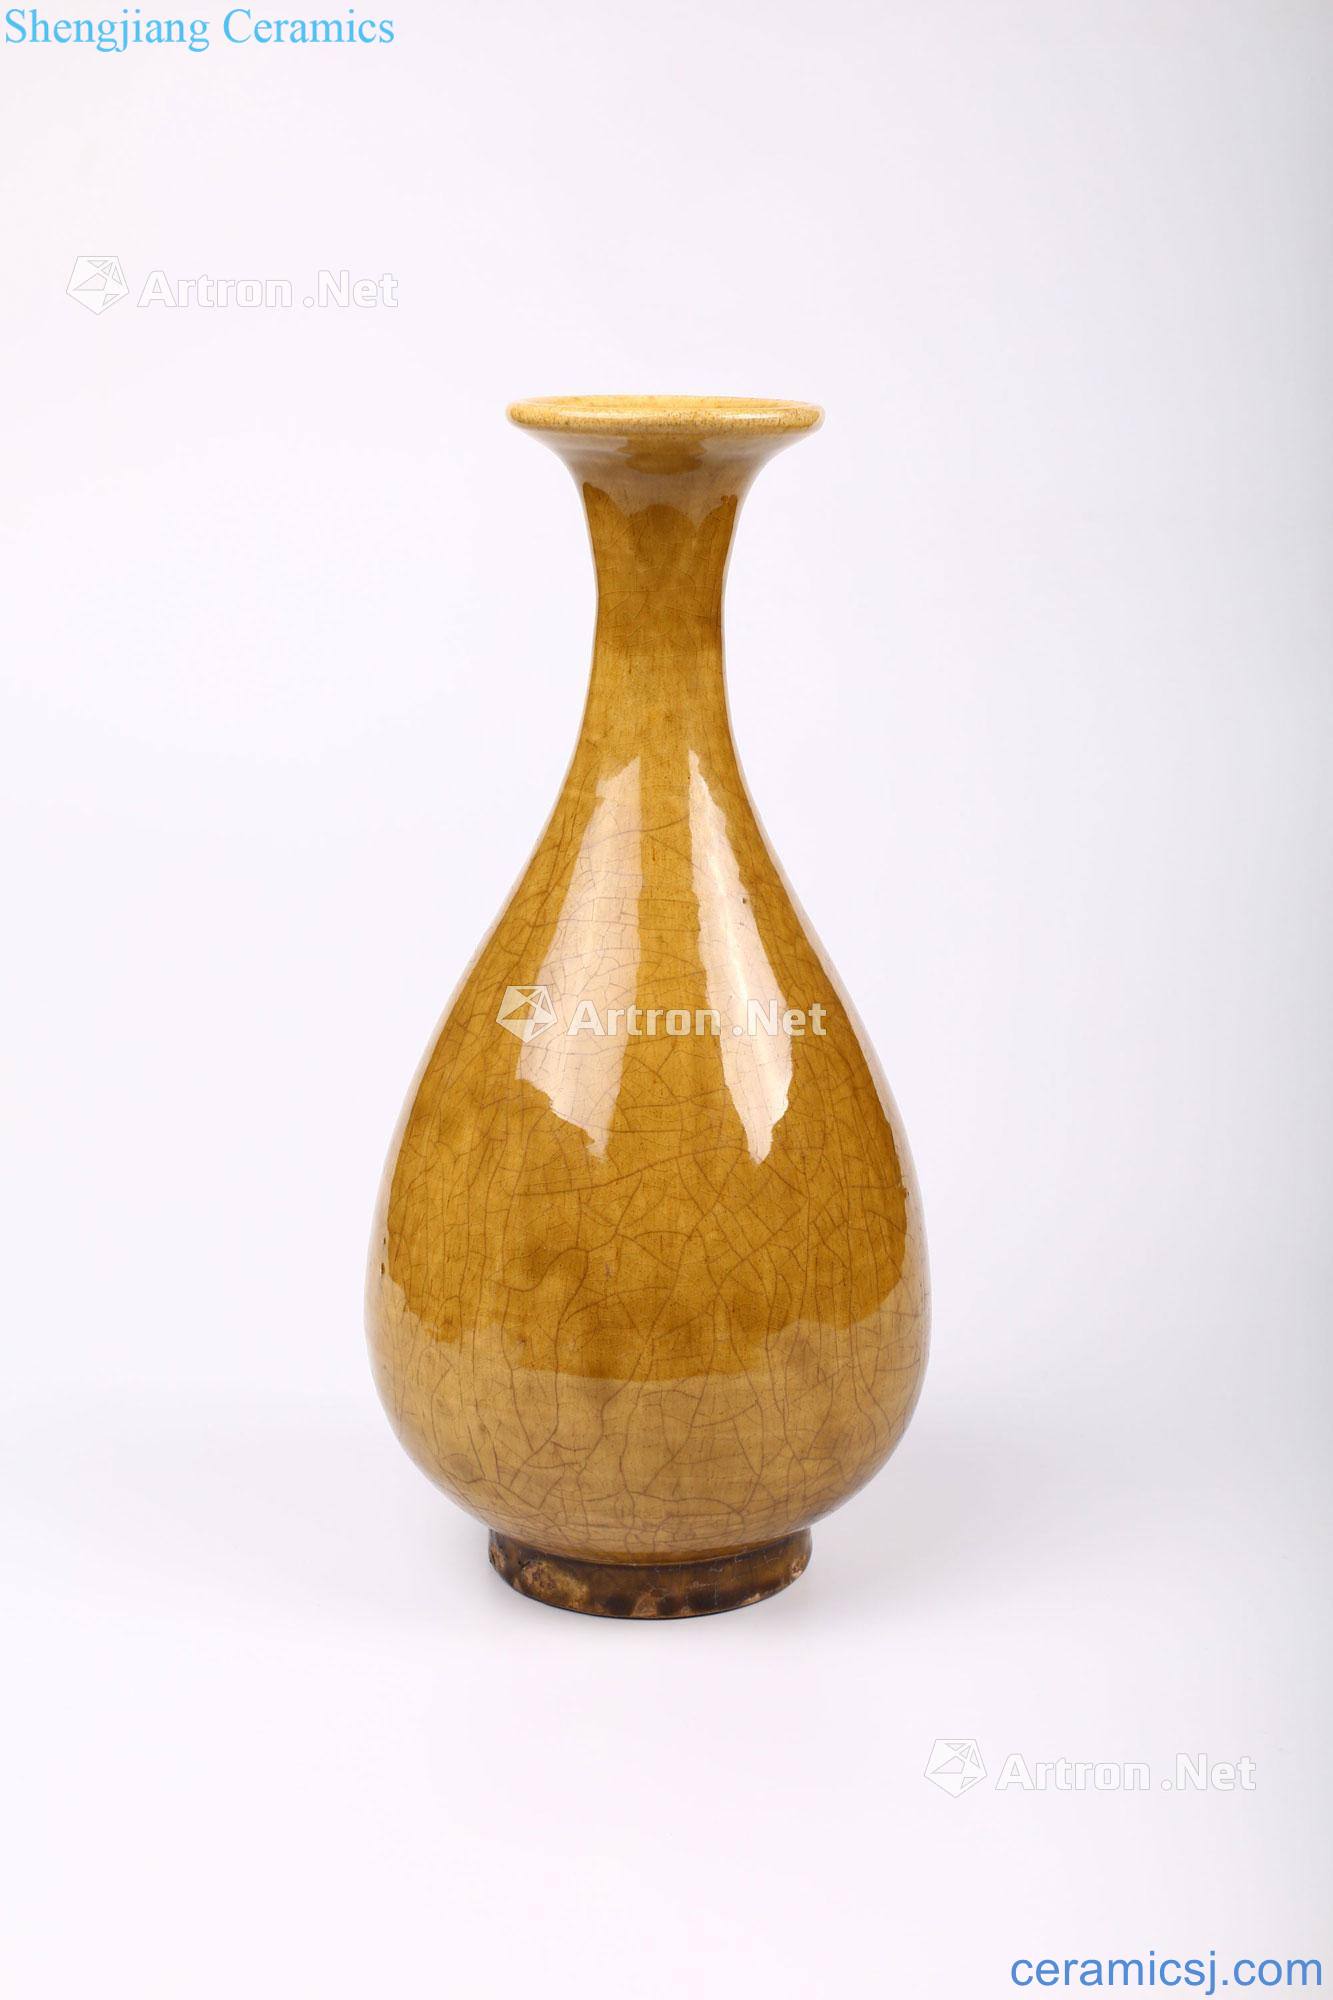 The yuan dynasty Yellow glaze okho spring bottle